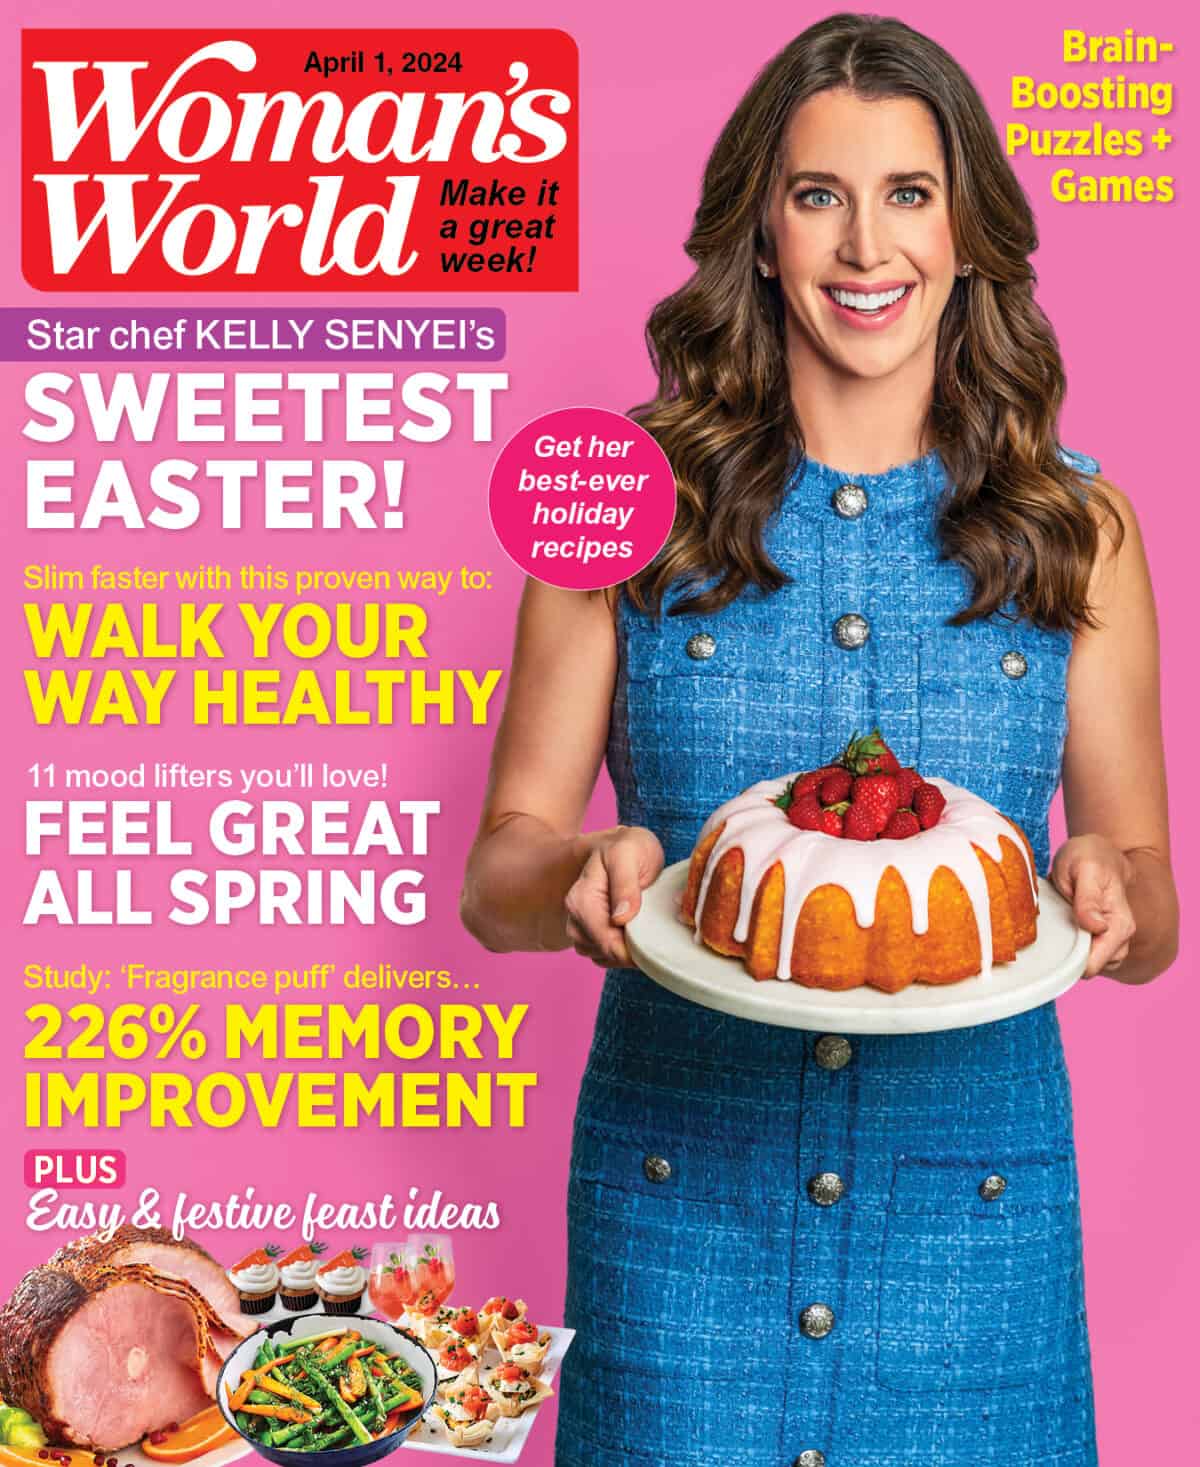 Kelly Senyei on the cover of Woman's World April 2024 magazine.